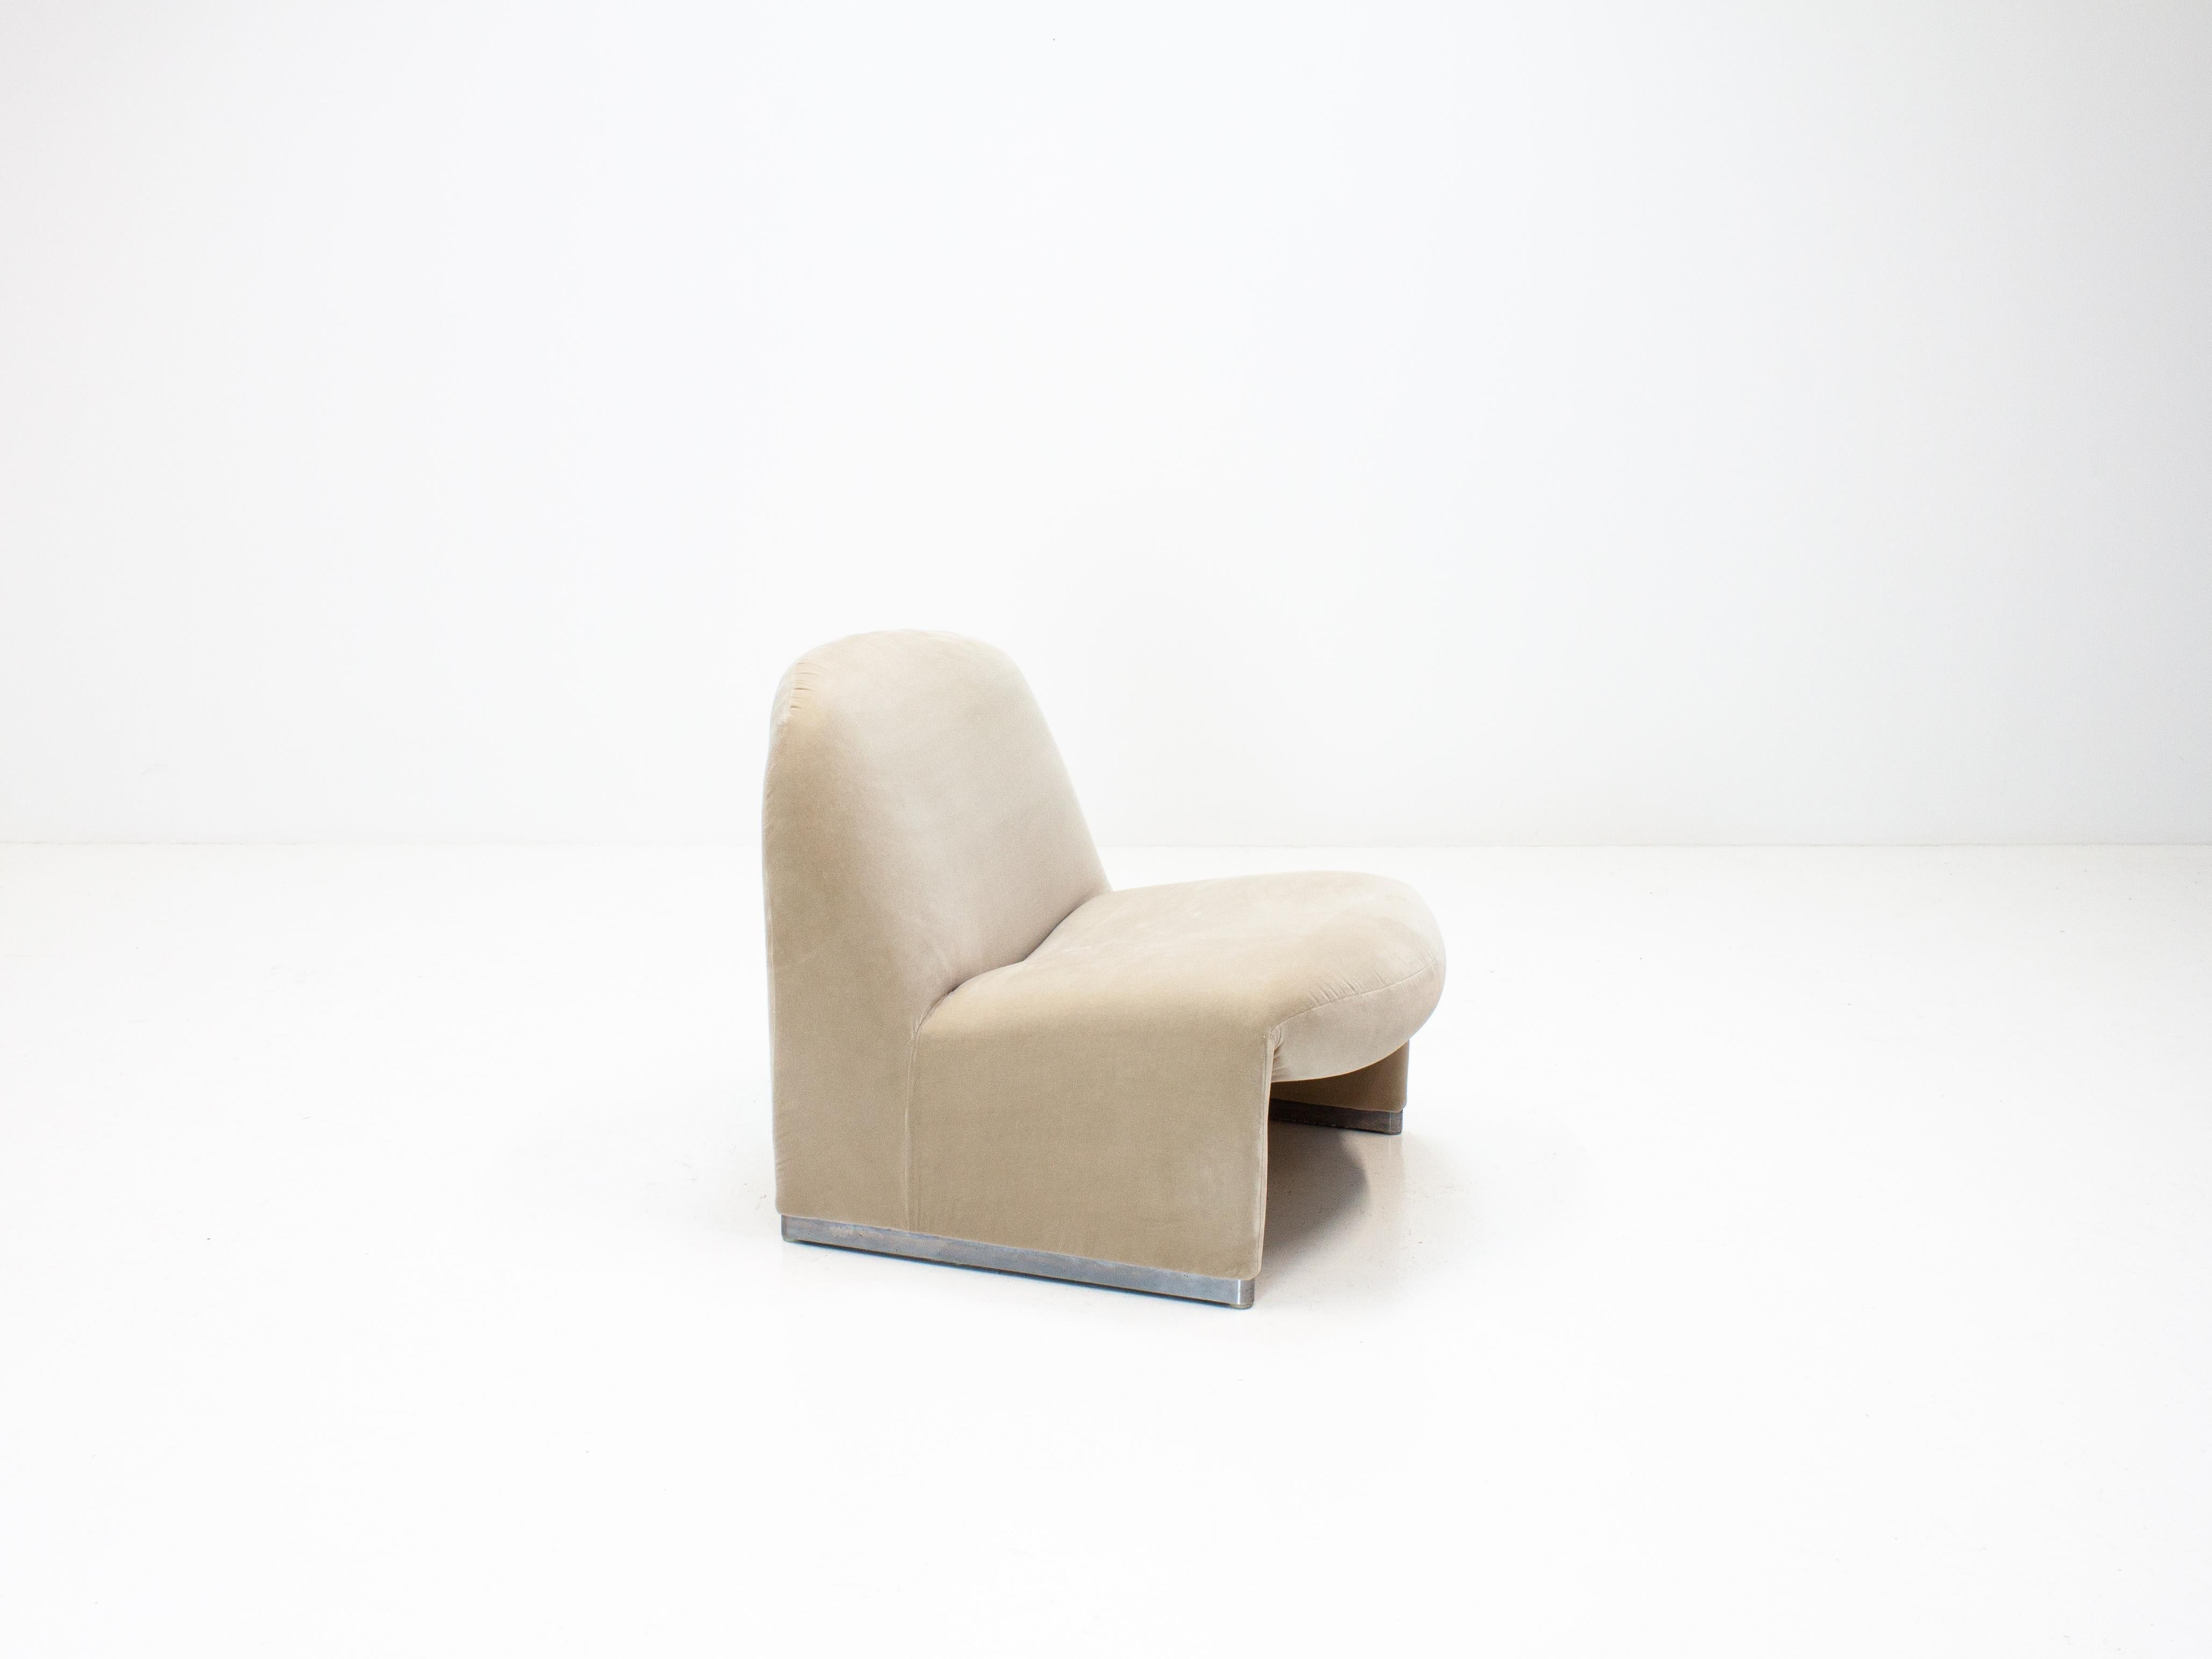 Giancarlo Piretti “Alky” Chair in New Velvet, Artifort, 1970s In Good Condition In London Road, Baldock, Hertfordshire